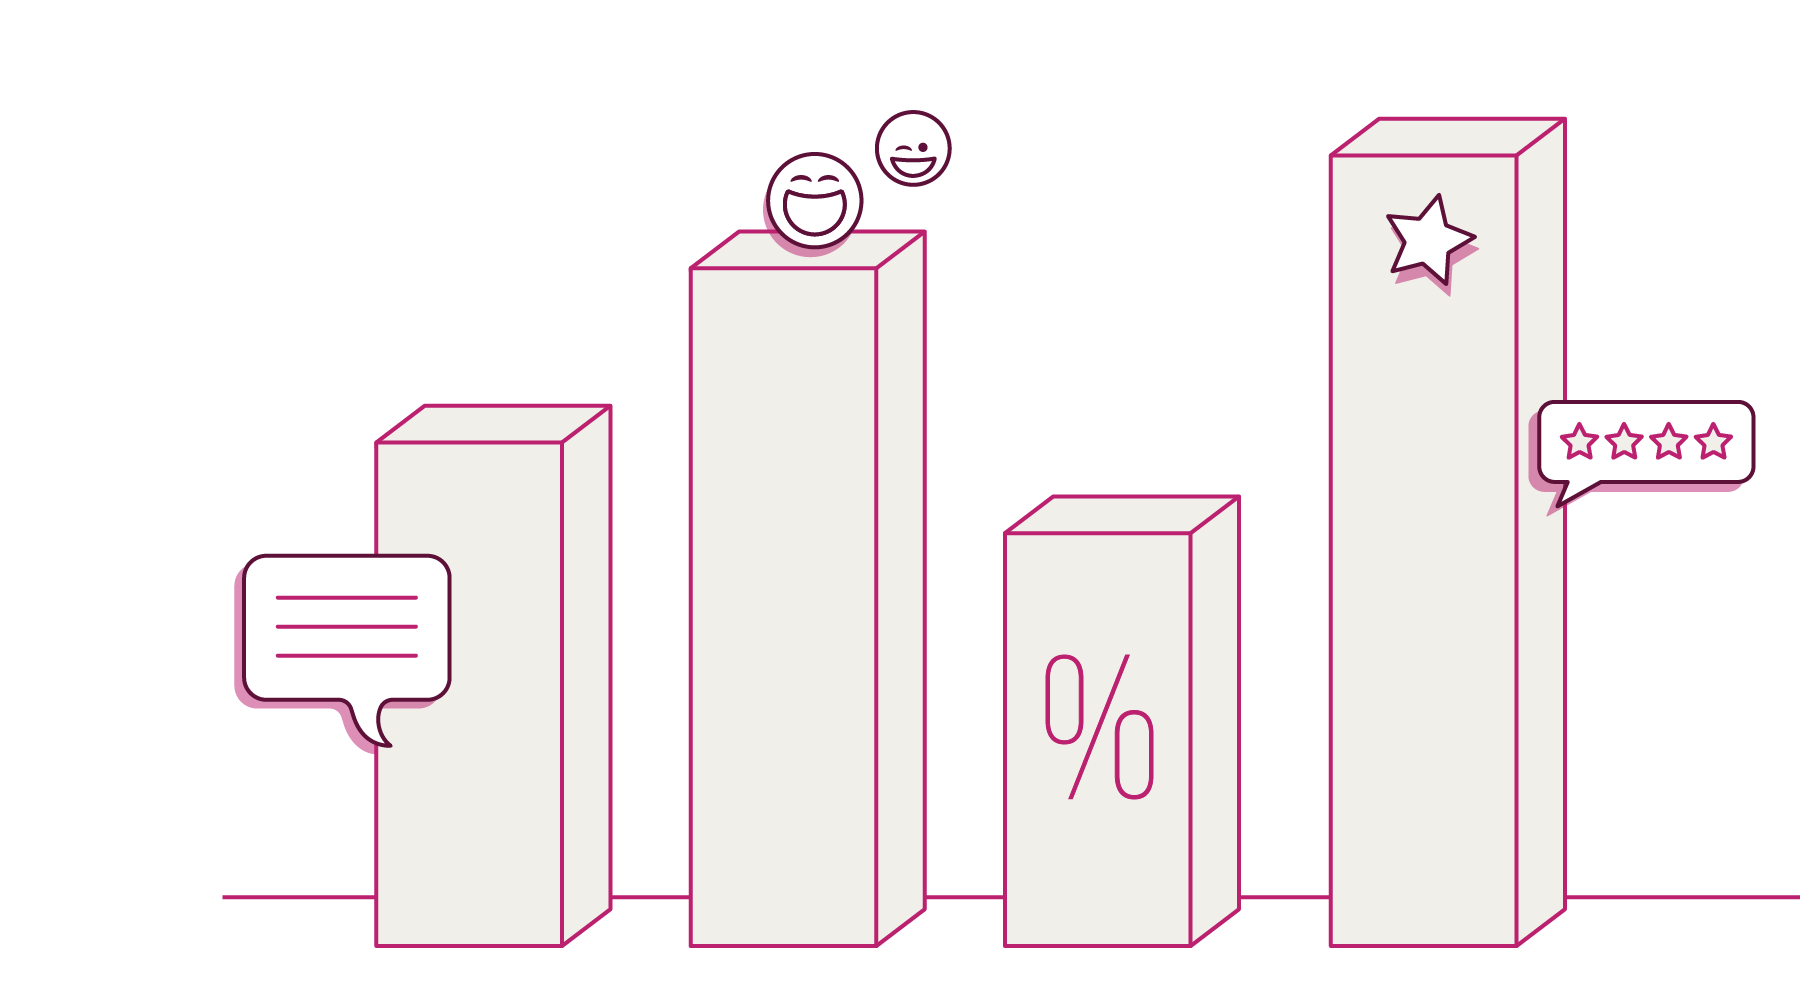 Employee engagement and satisfaction surveys